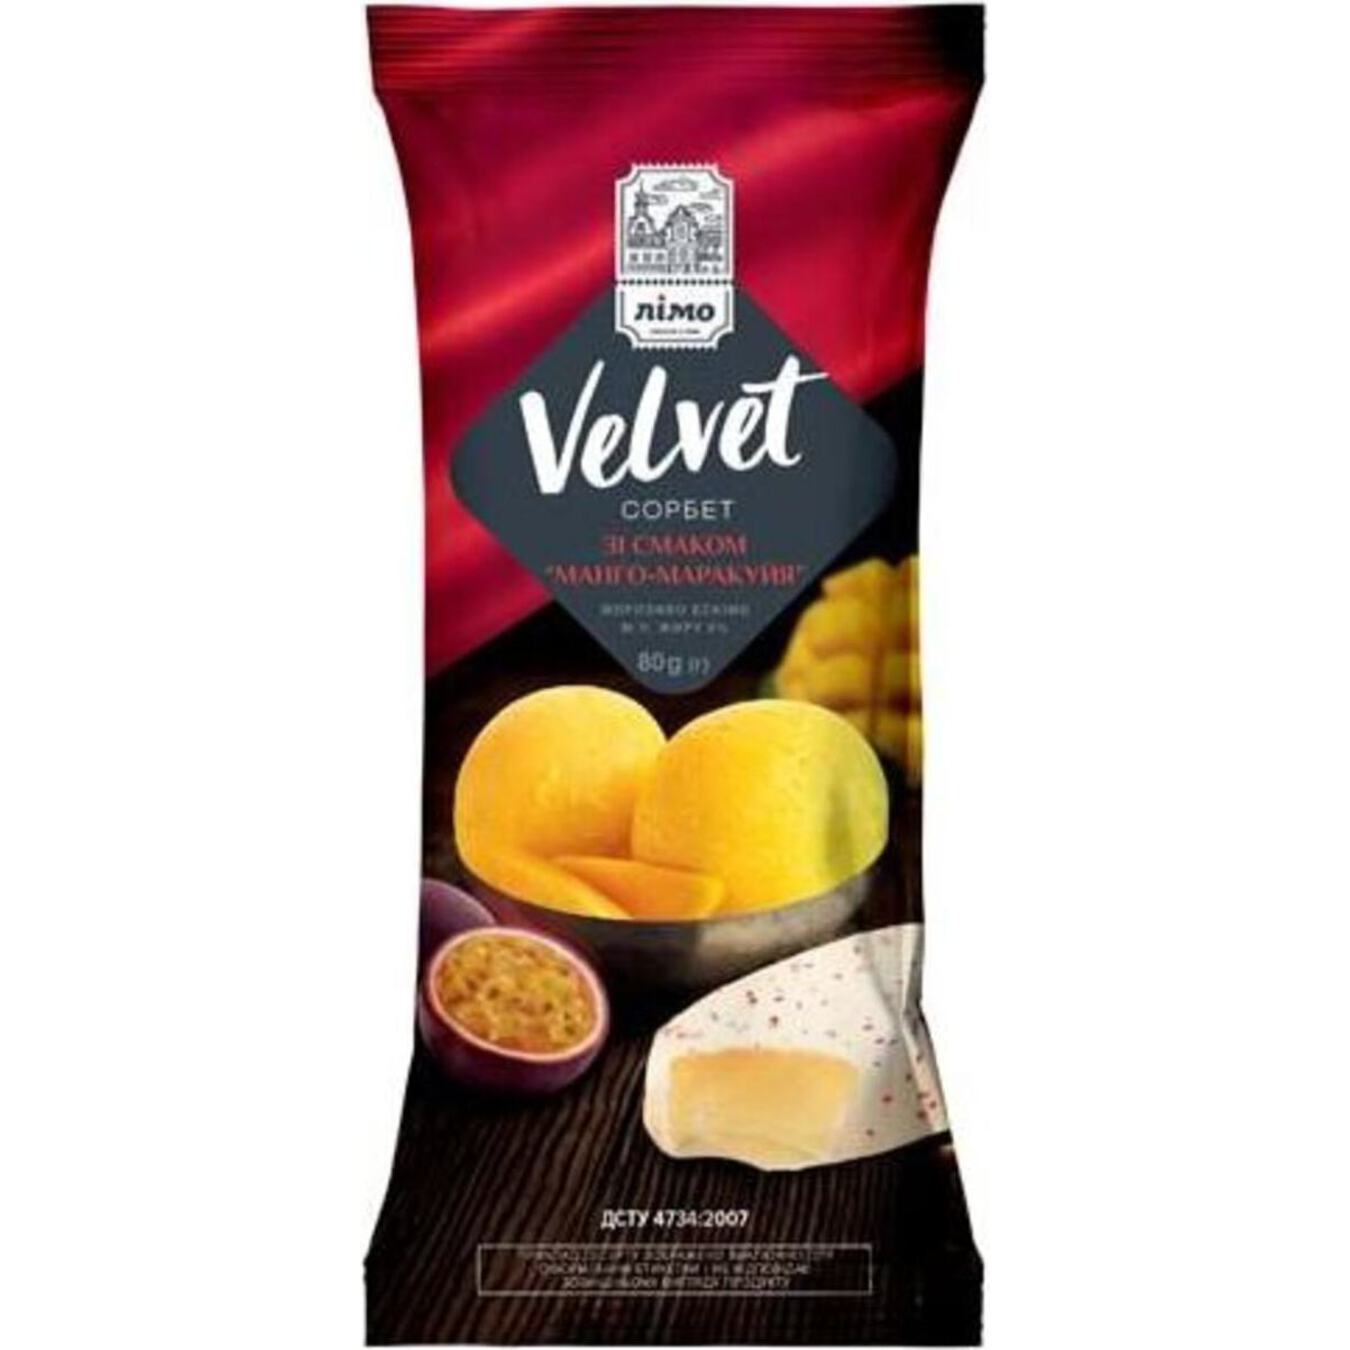 Limo Velvet mango-passion fruit ice-cream 80g